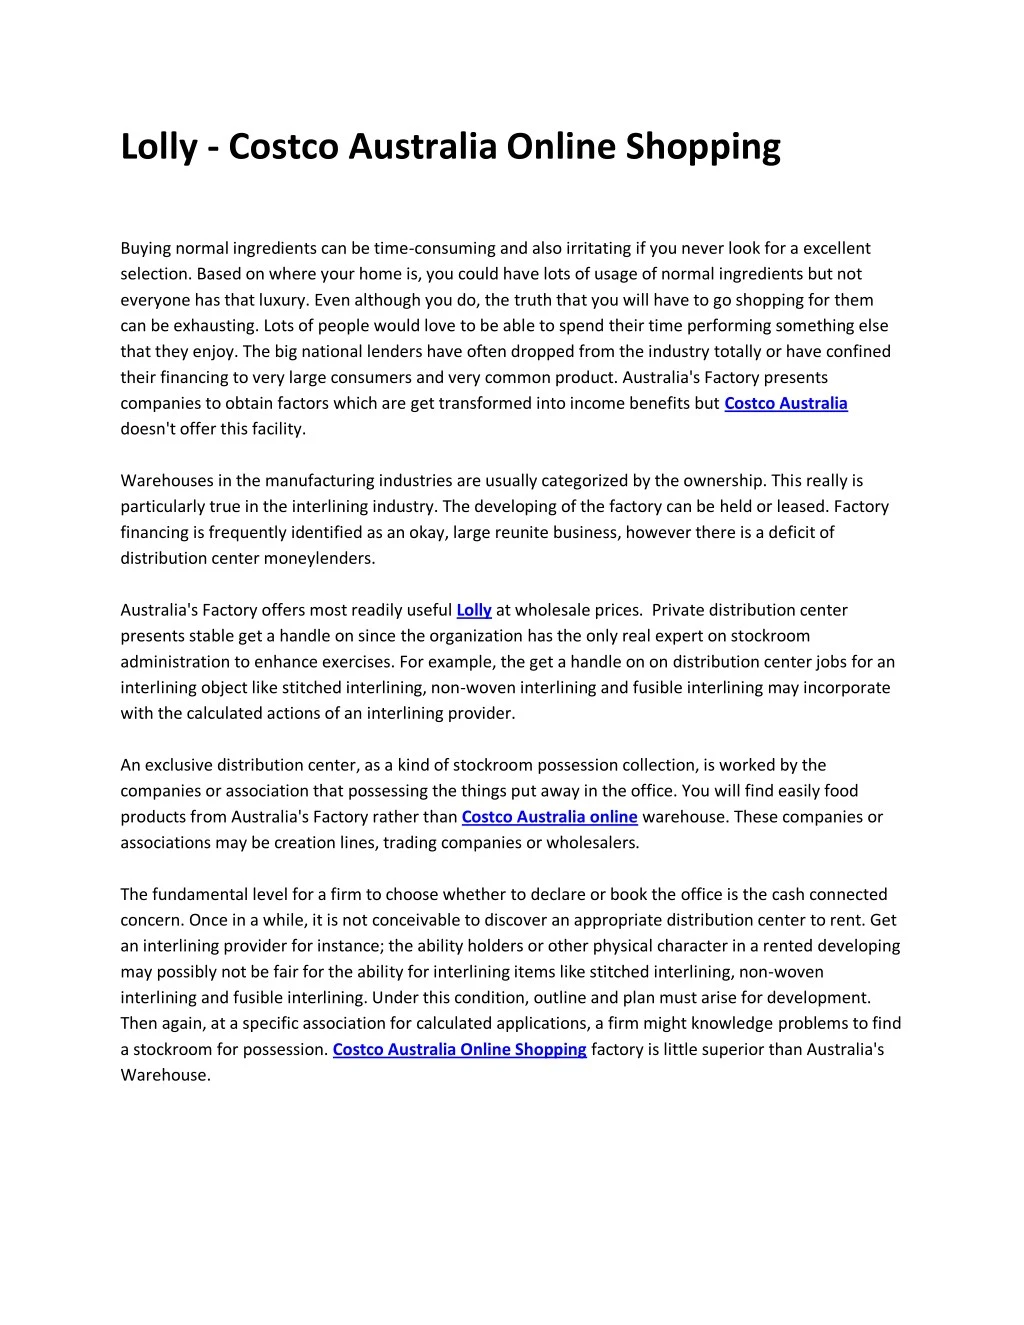 lolly costco australia online shopping